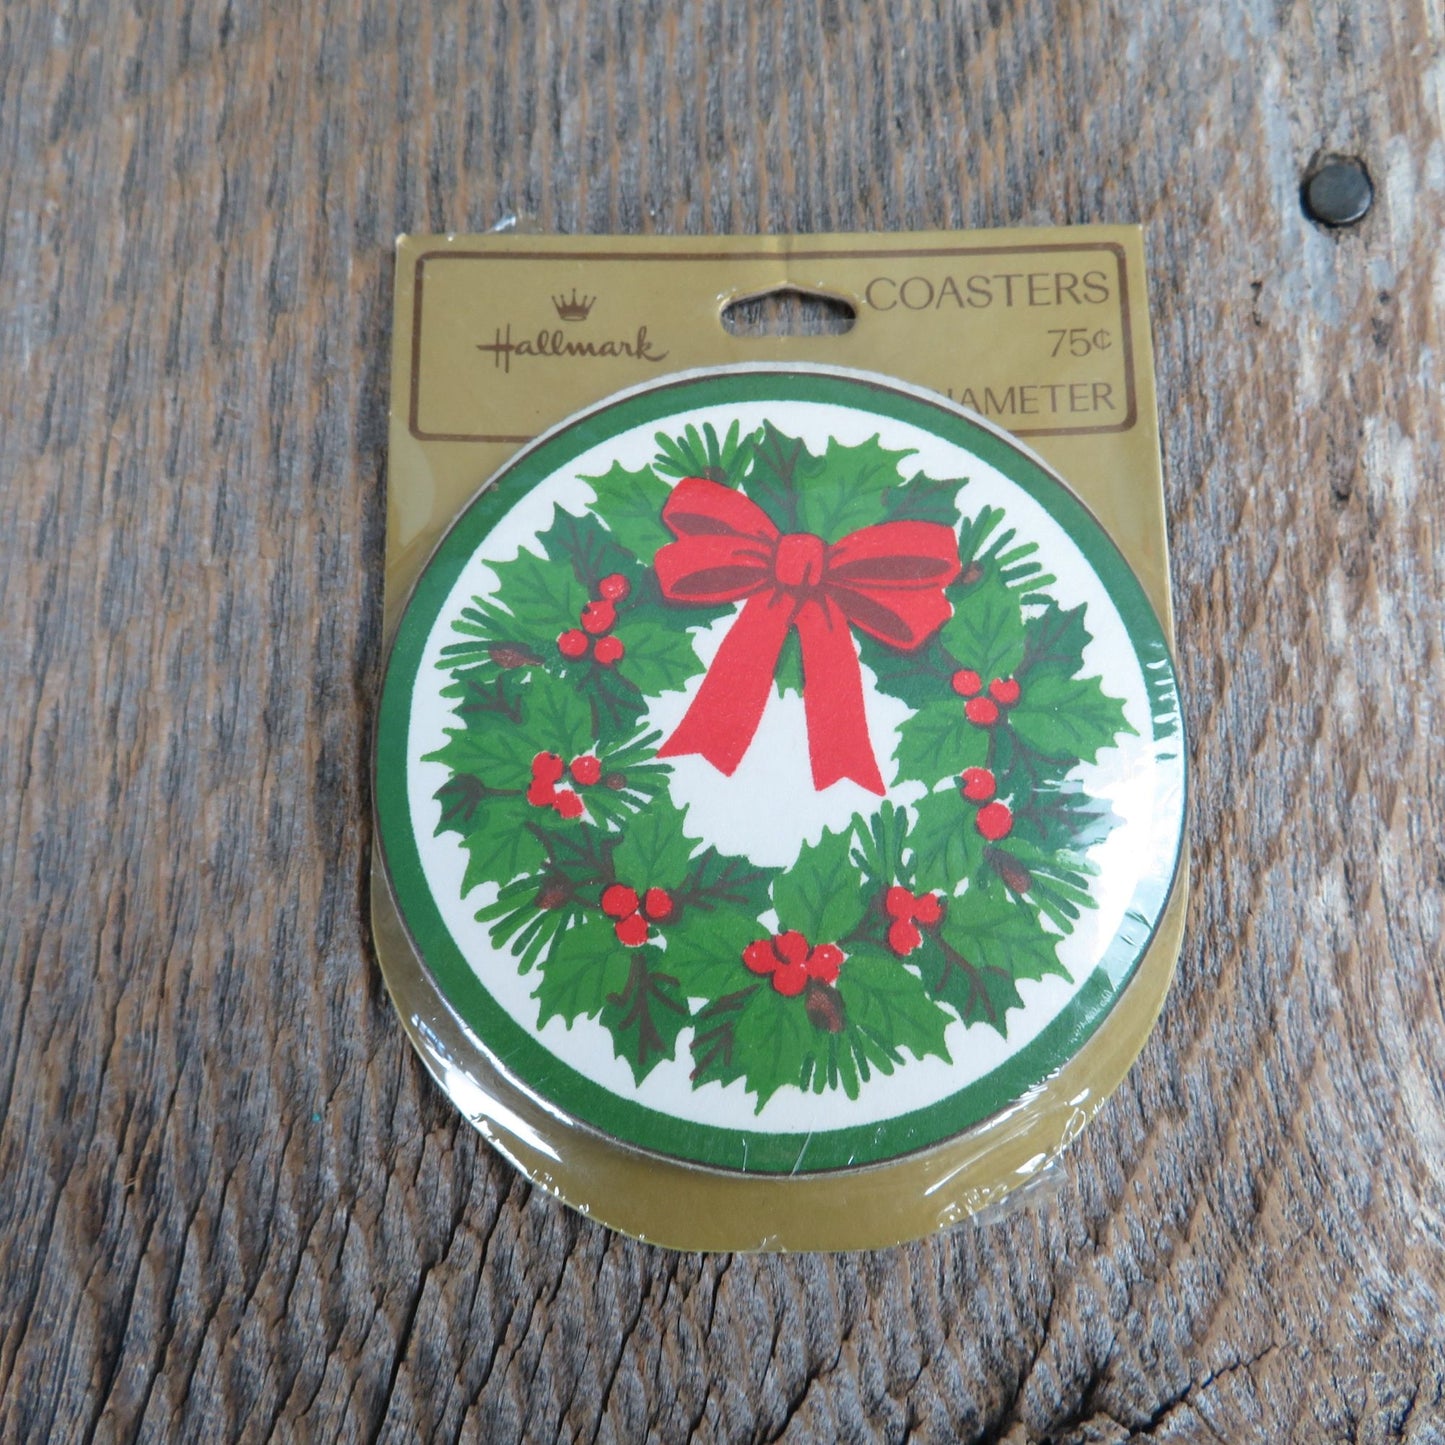 Vintage Hallmark Drink Coasters Christmas Green Wreath Paper Coaster Holiday Entertaining